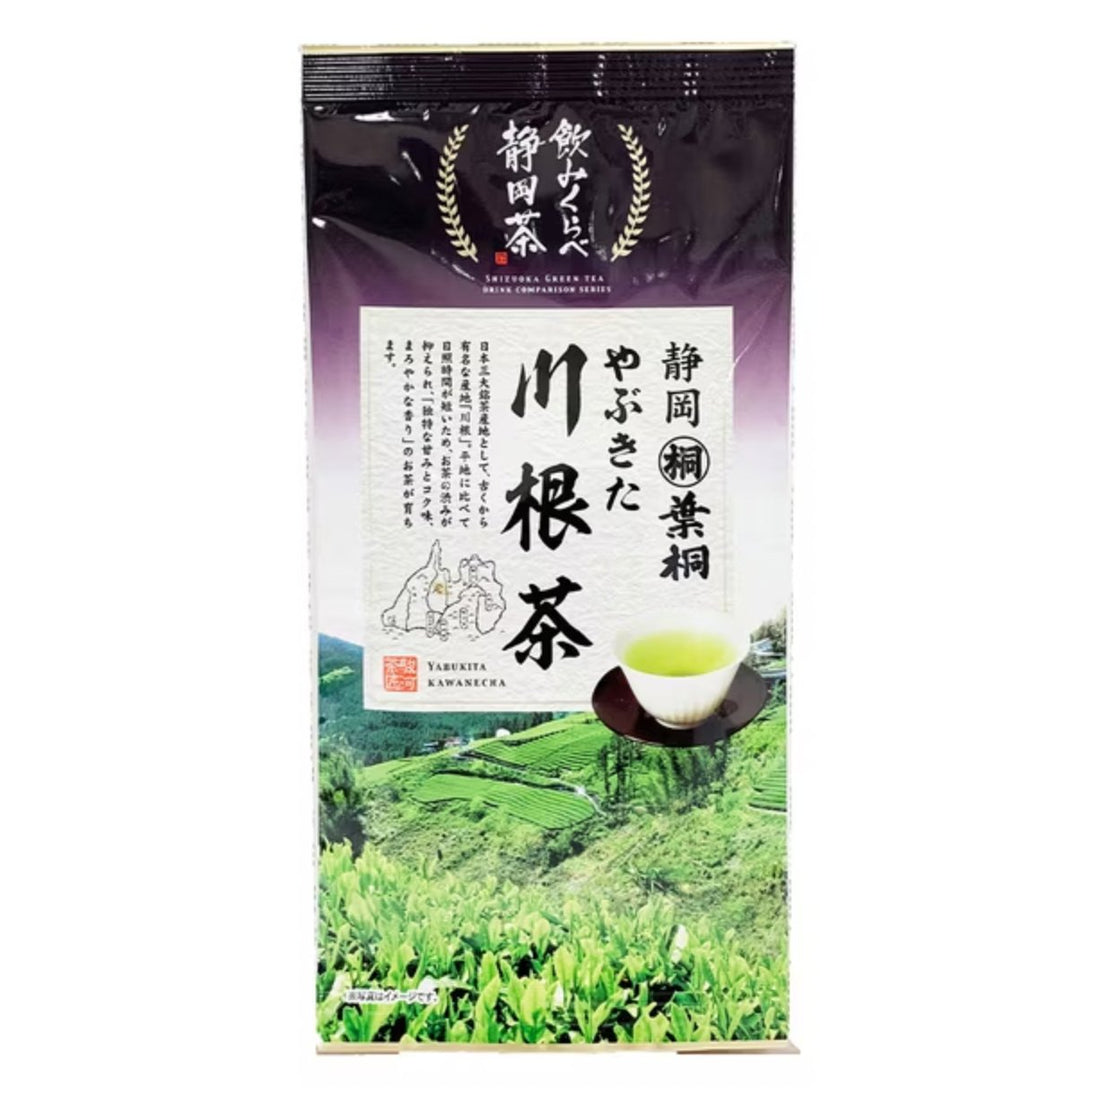 Hagiri Shizuoka Yabukita Kawane Tea 100g - NihonMura